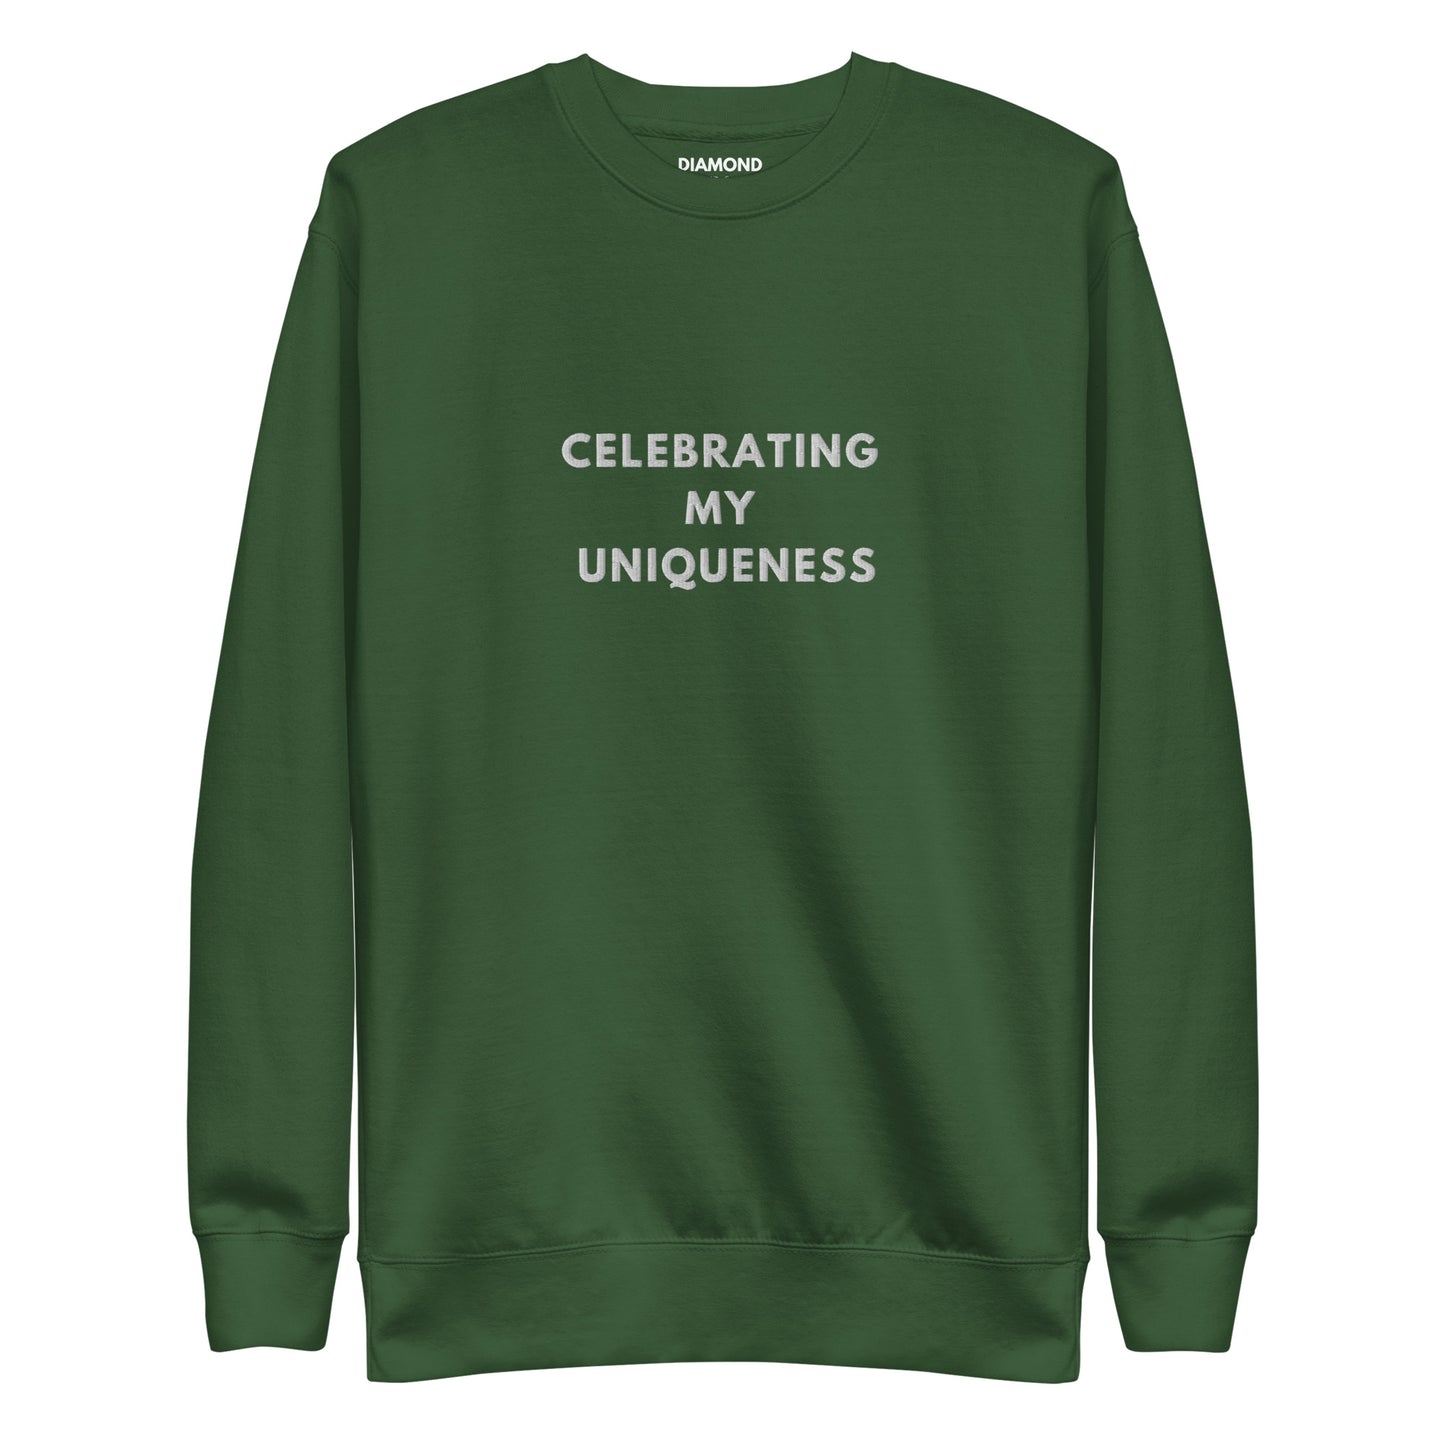 Celebrating my uniqueness Embroidered Unisex Premium Sweatshirt